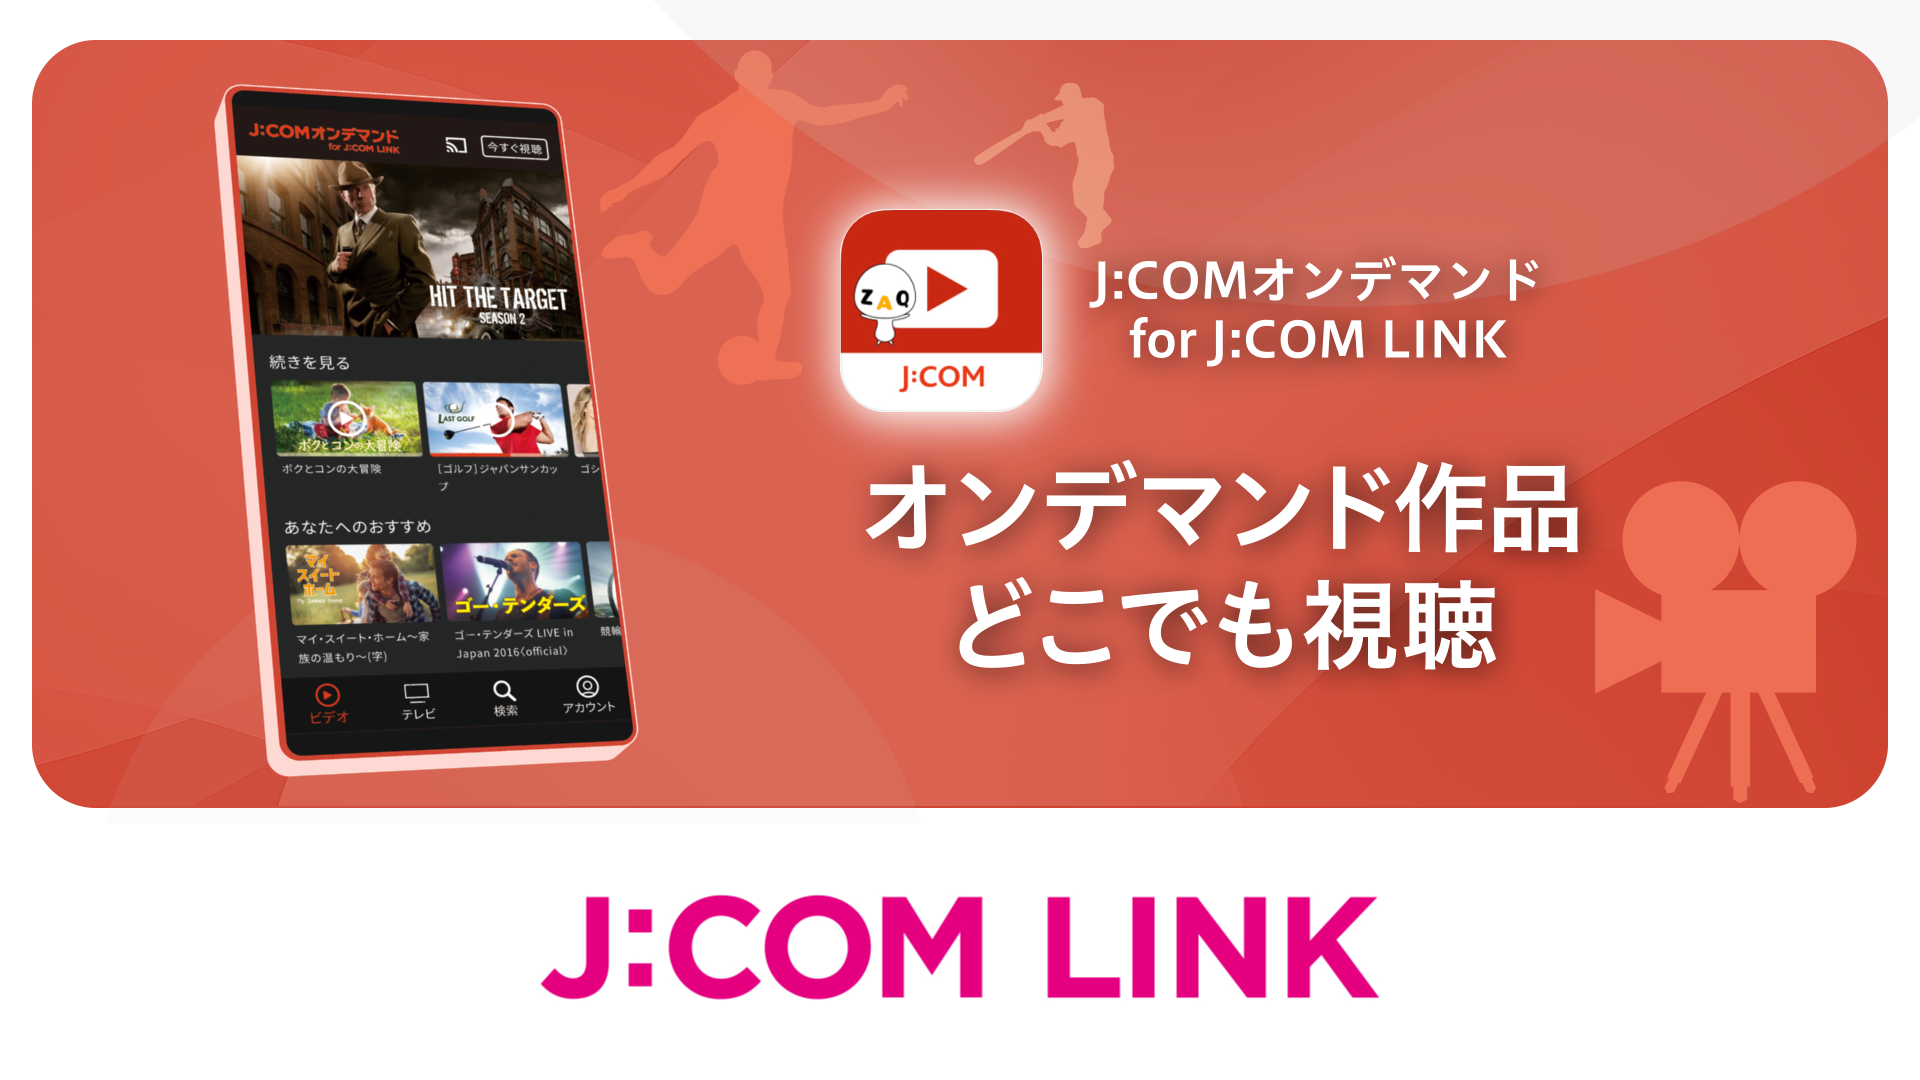 J:COM LINK - オンデマンド作品どこでも視聴（動画）